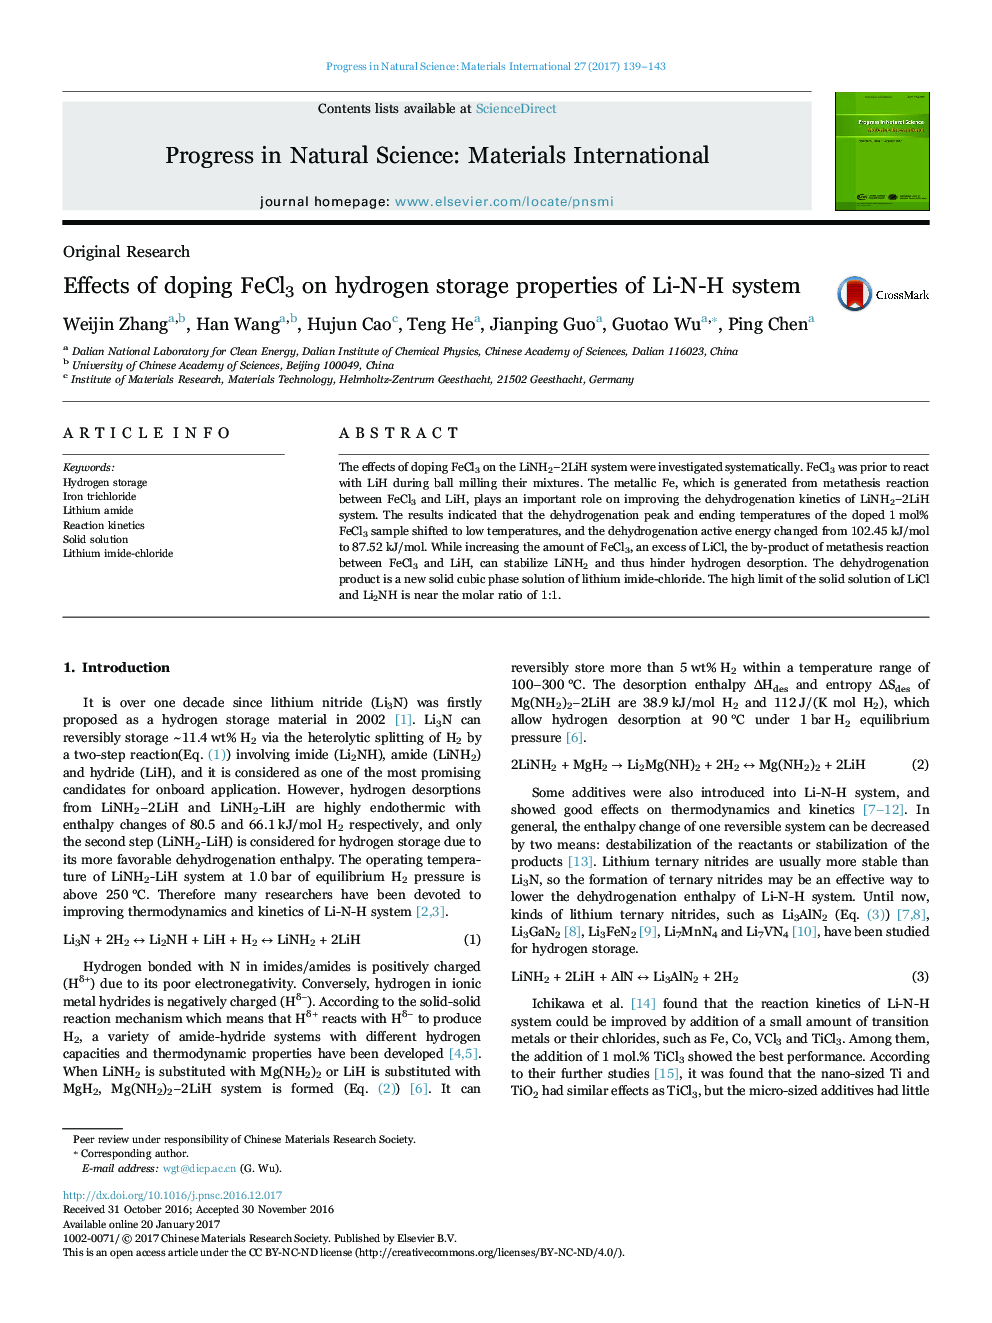 Effects of doping FeCl3 on hydrogen storage properties of Li-N-H system